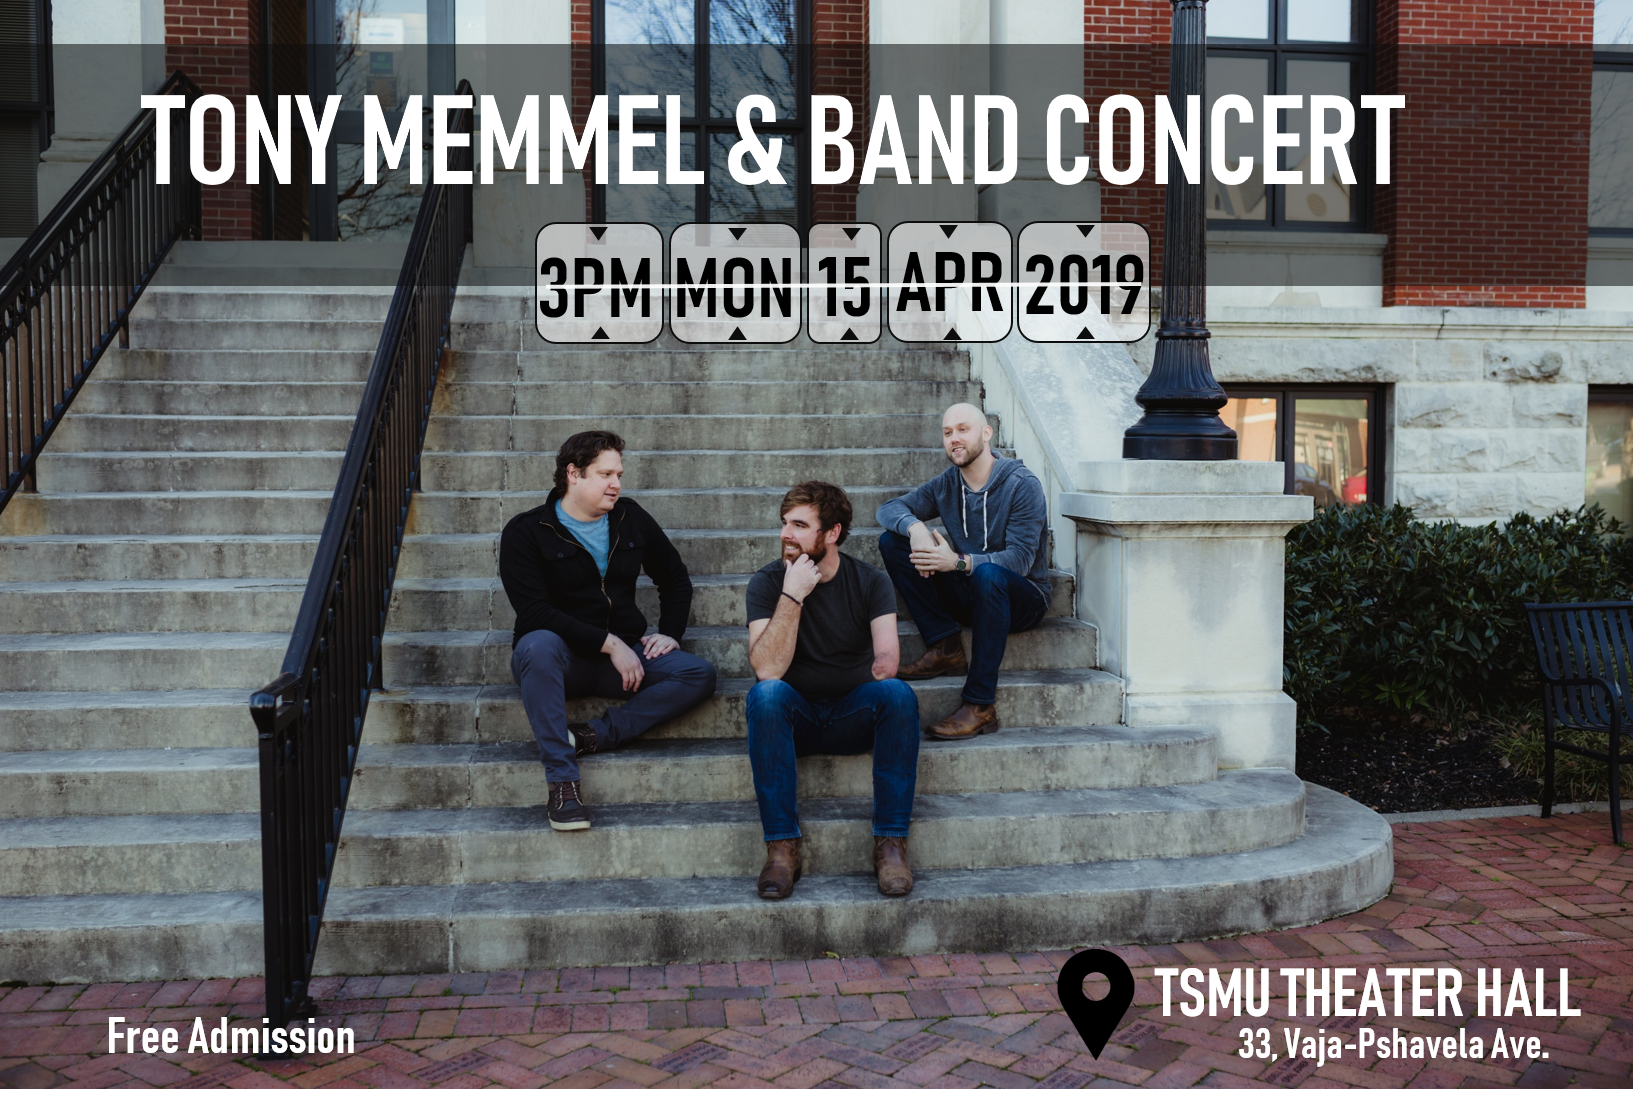 Tony Memmel and Band at TSMU